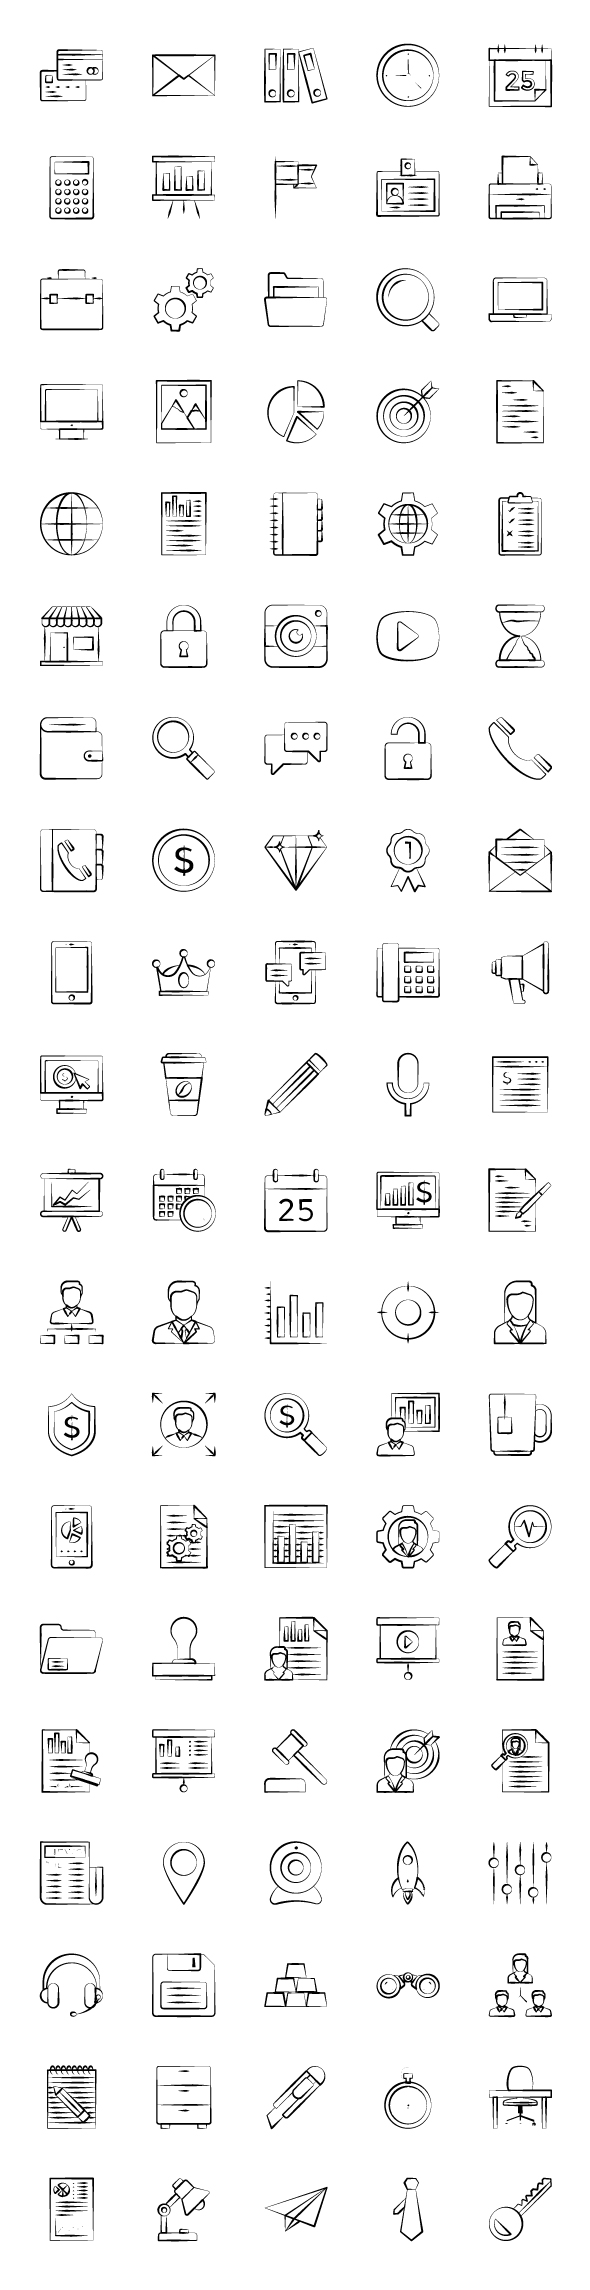 Flat business icons - 300 pieces. (512x512 pixels, png